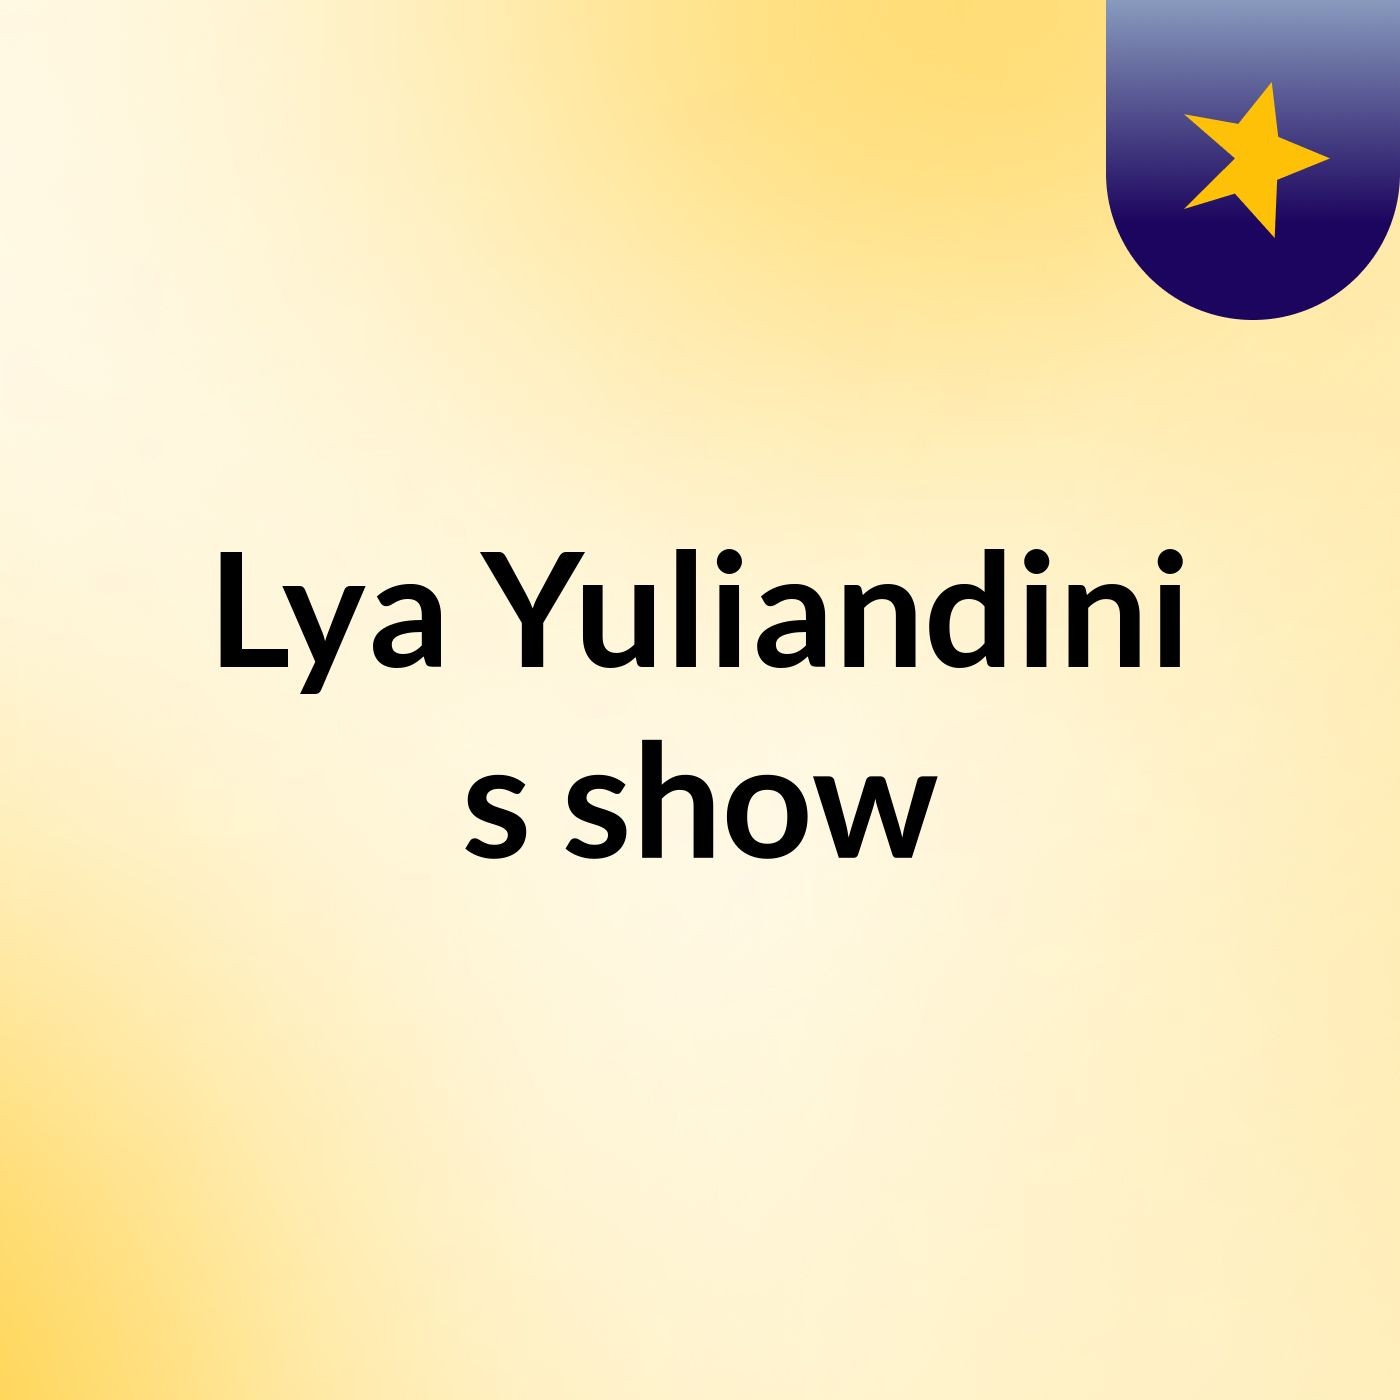 Lya Yuliandini's show